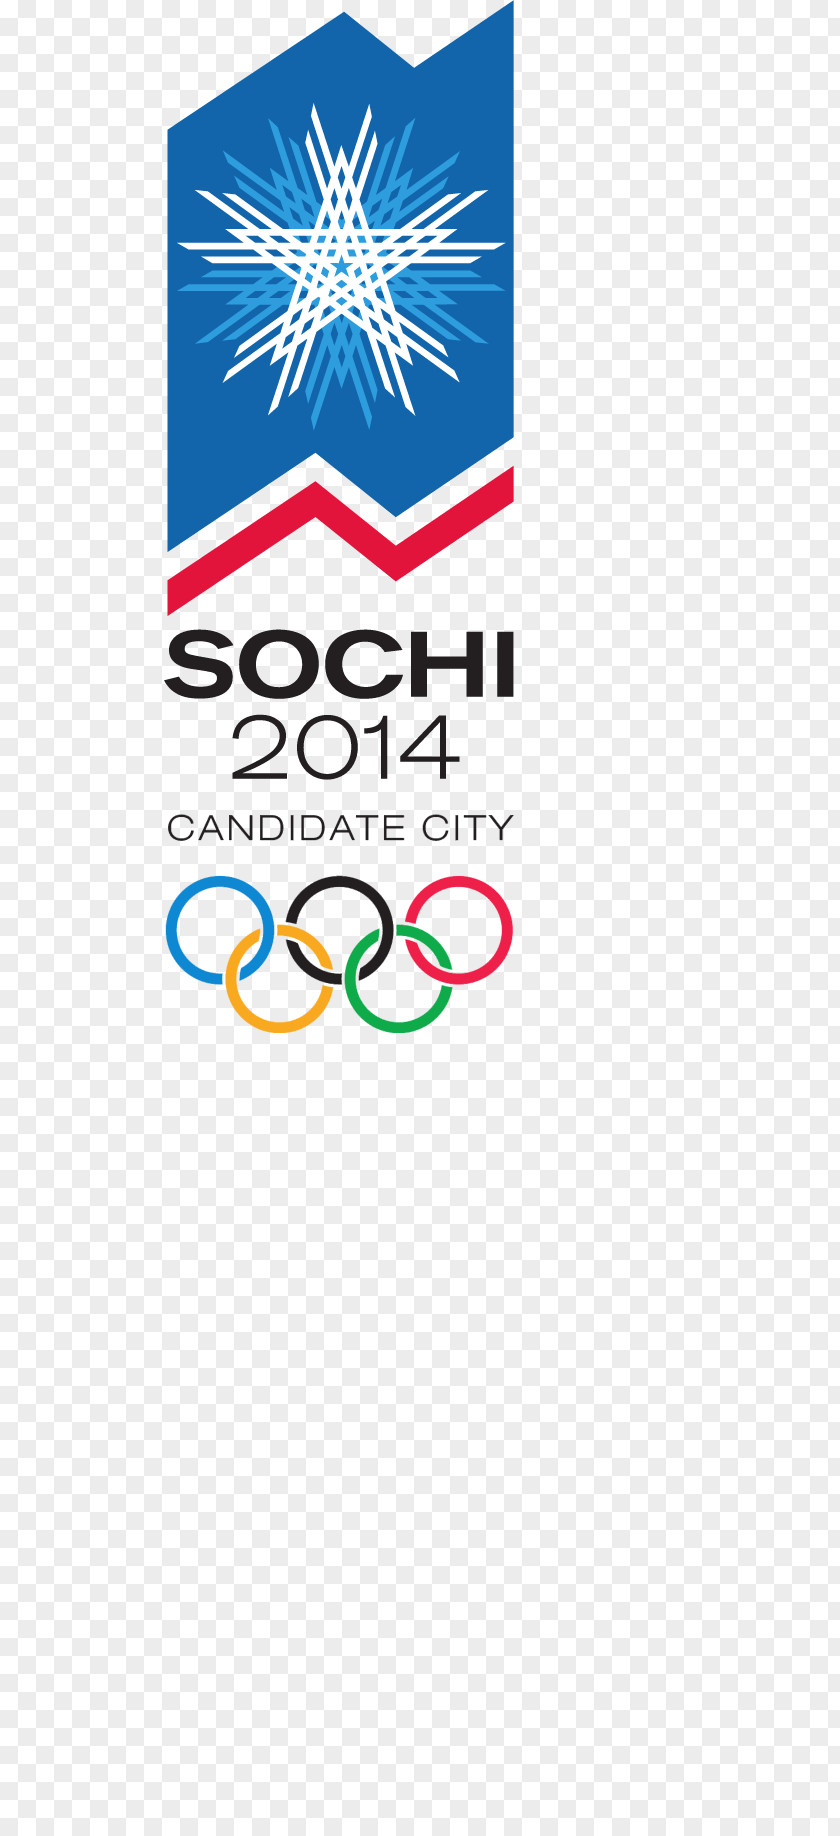 Sochi 2014 Winter Olympics Olympic Games PyeongChang 2018 The PNG